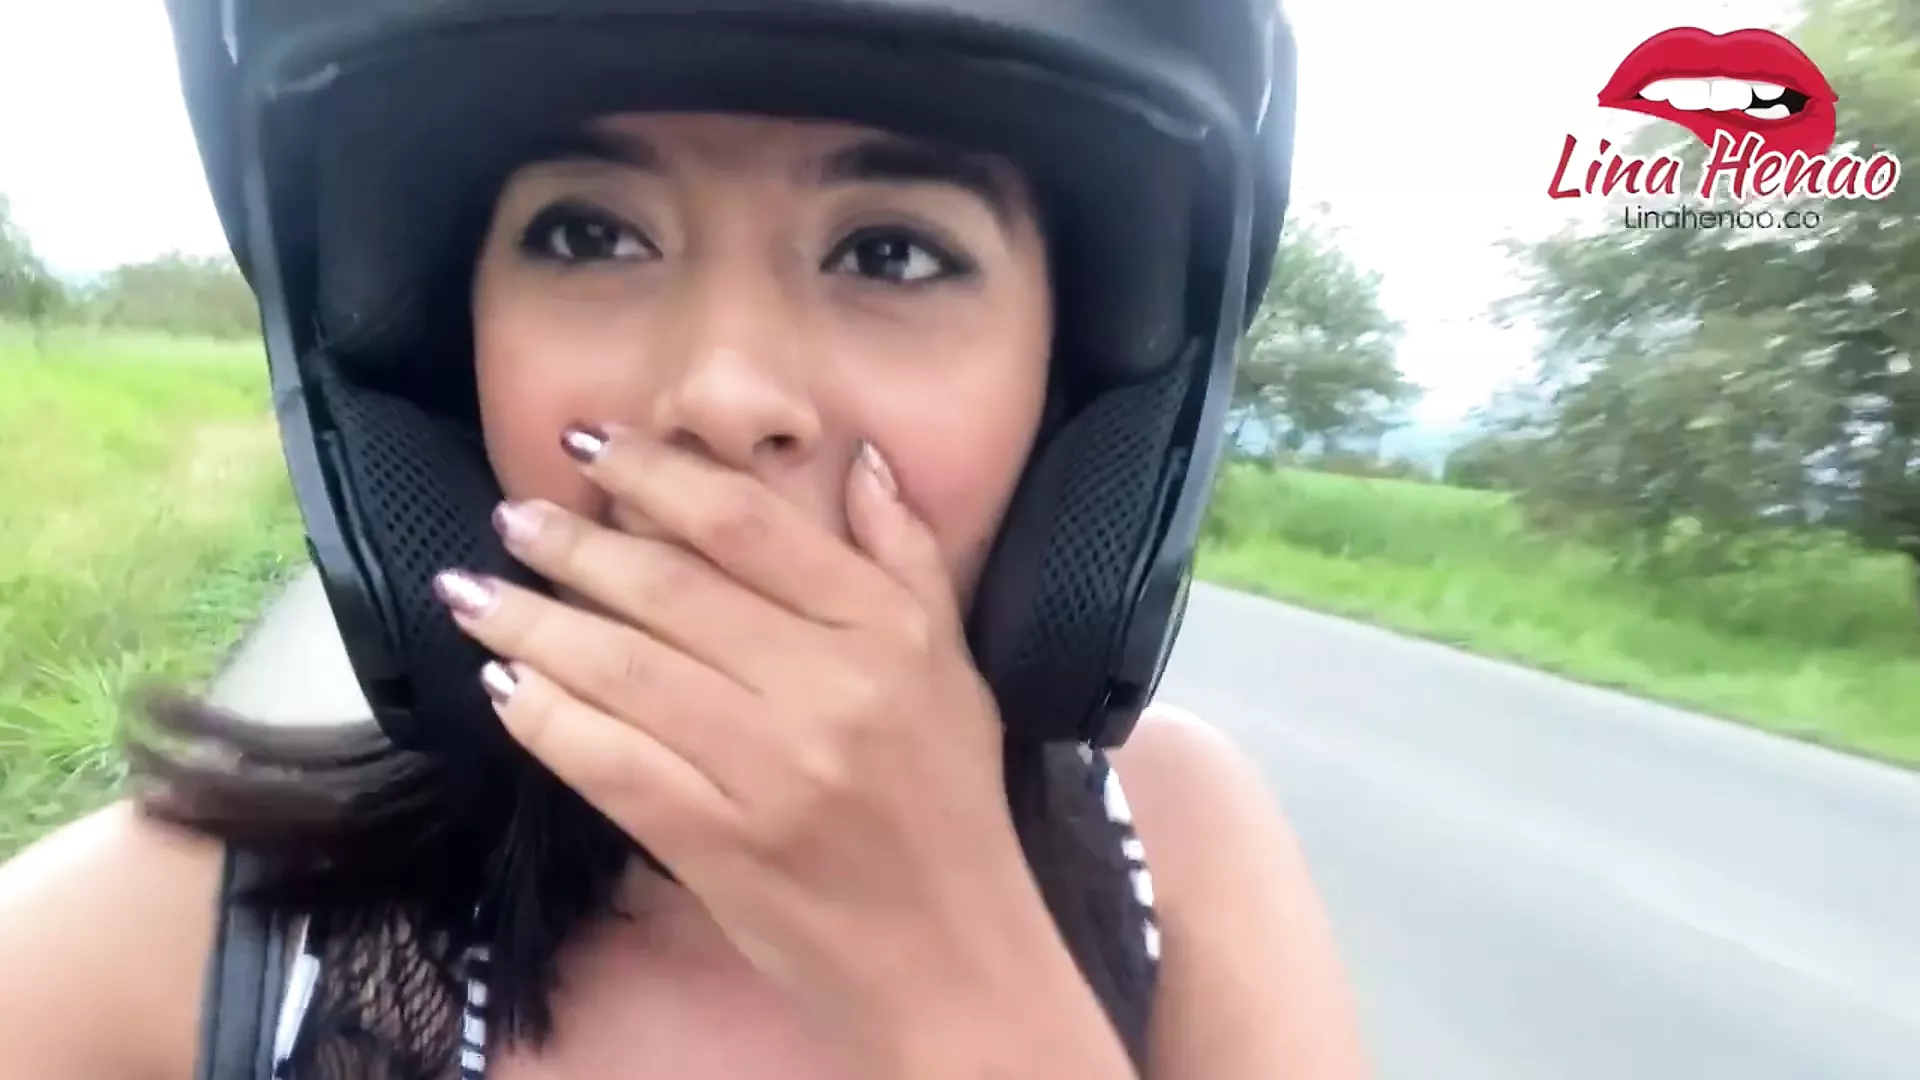 danu kurniawan add girl orgasm on motorcycle photo